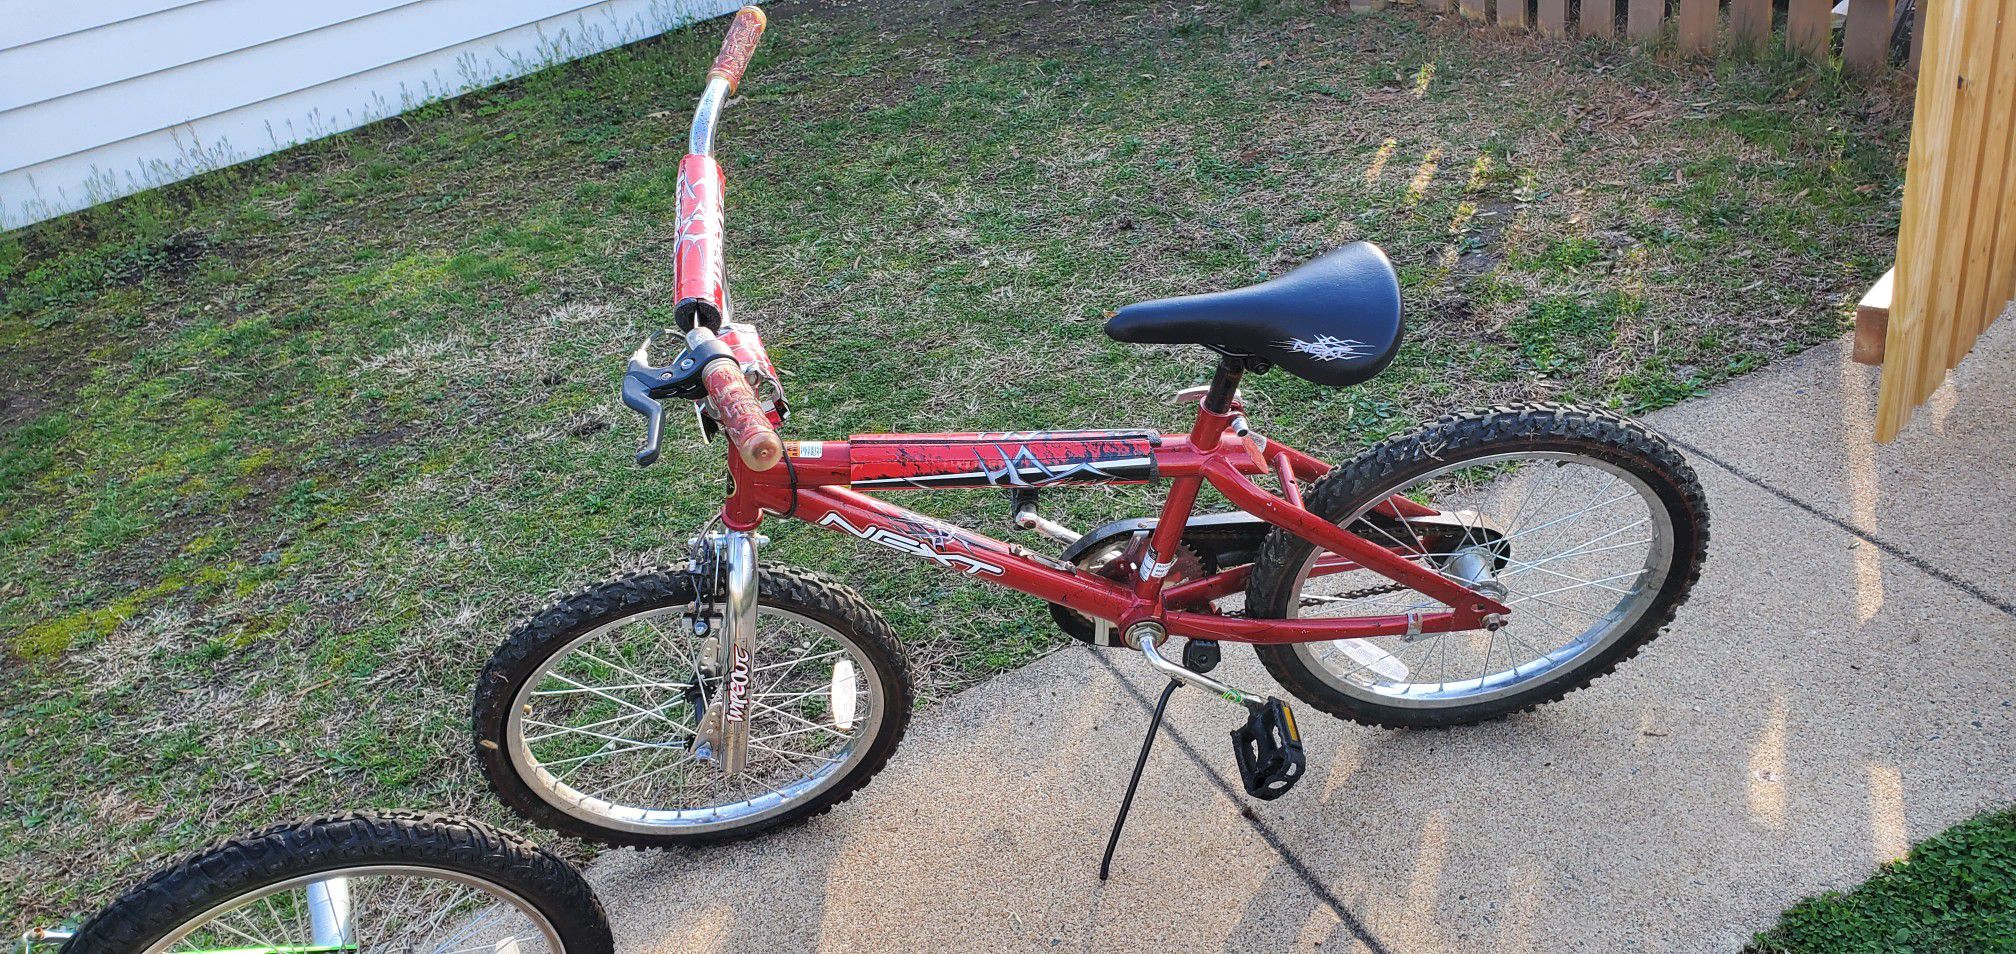 20" bike for kids 7-10 years old